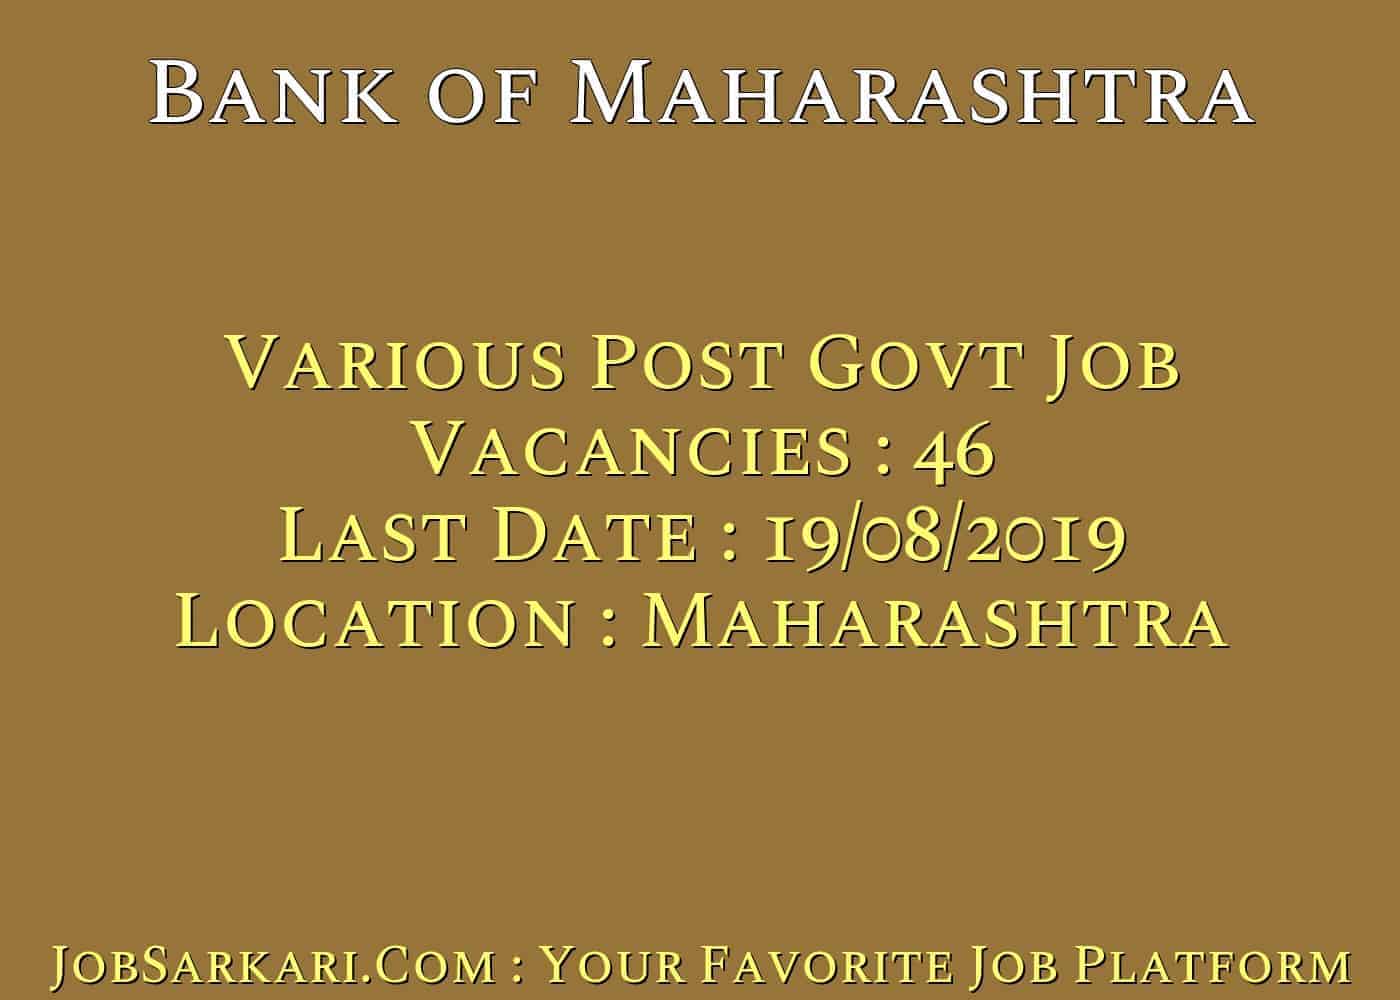 Bank of Maharashtra Recruitment 2019 For Various Post Govt Job